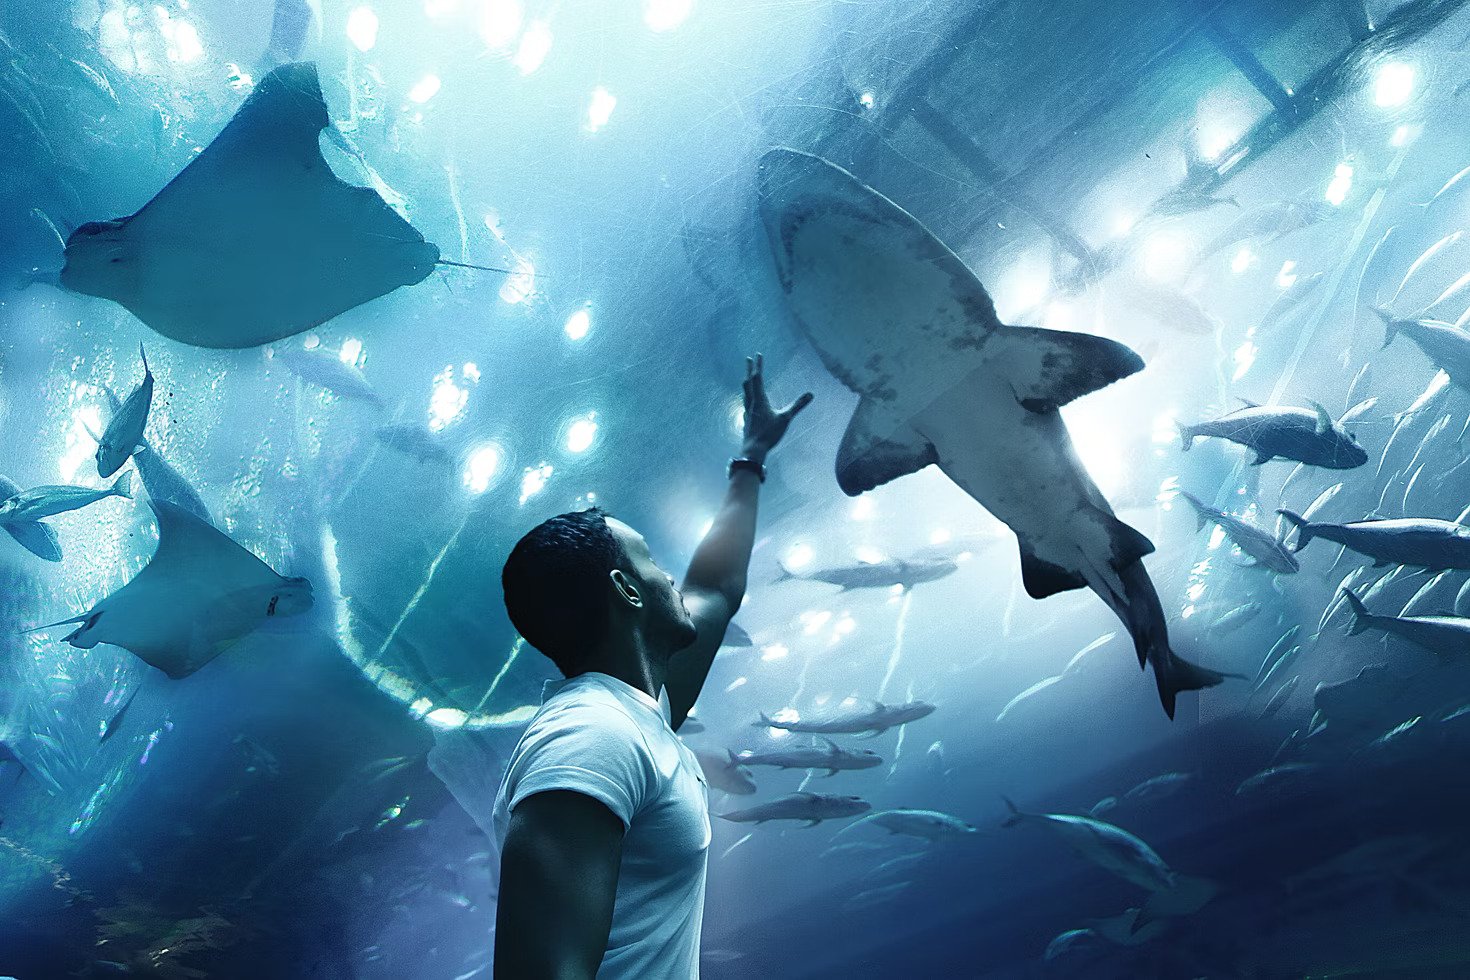 Combo: Motiongate™ Dubai + Dubai Aquarium And Underwater Zoo Tickets